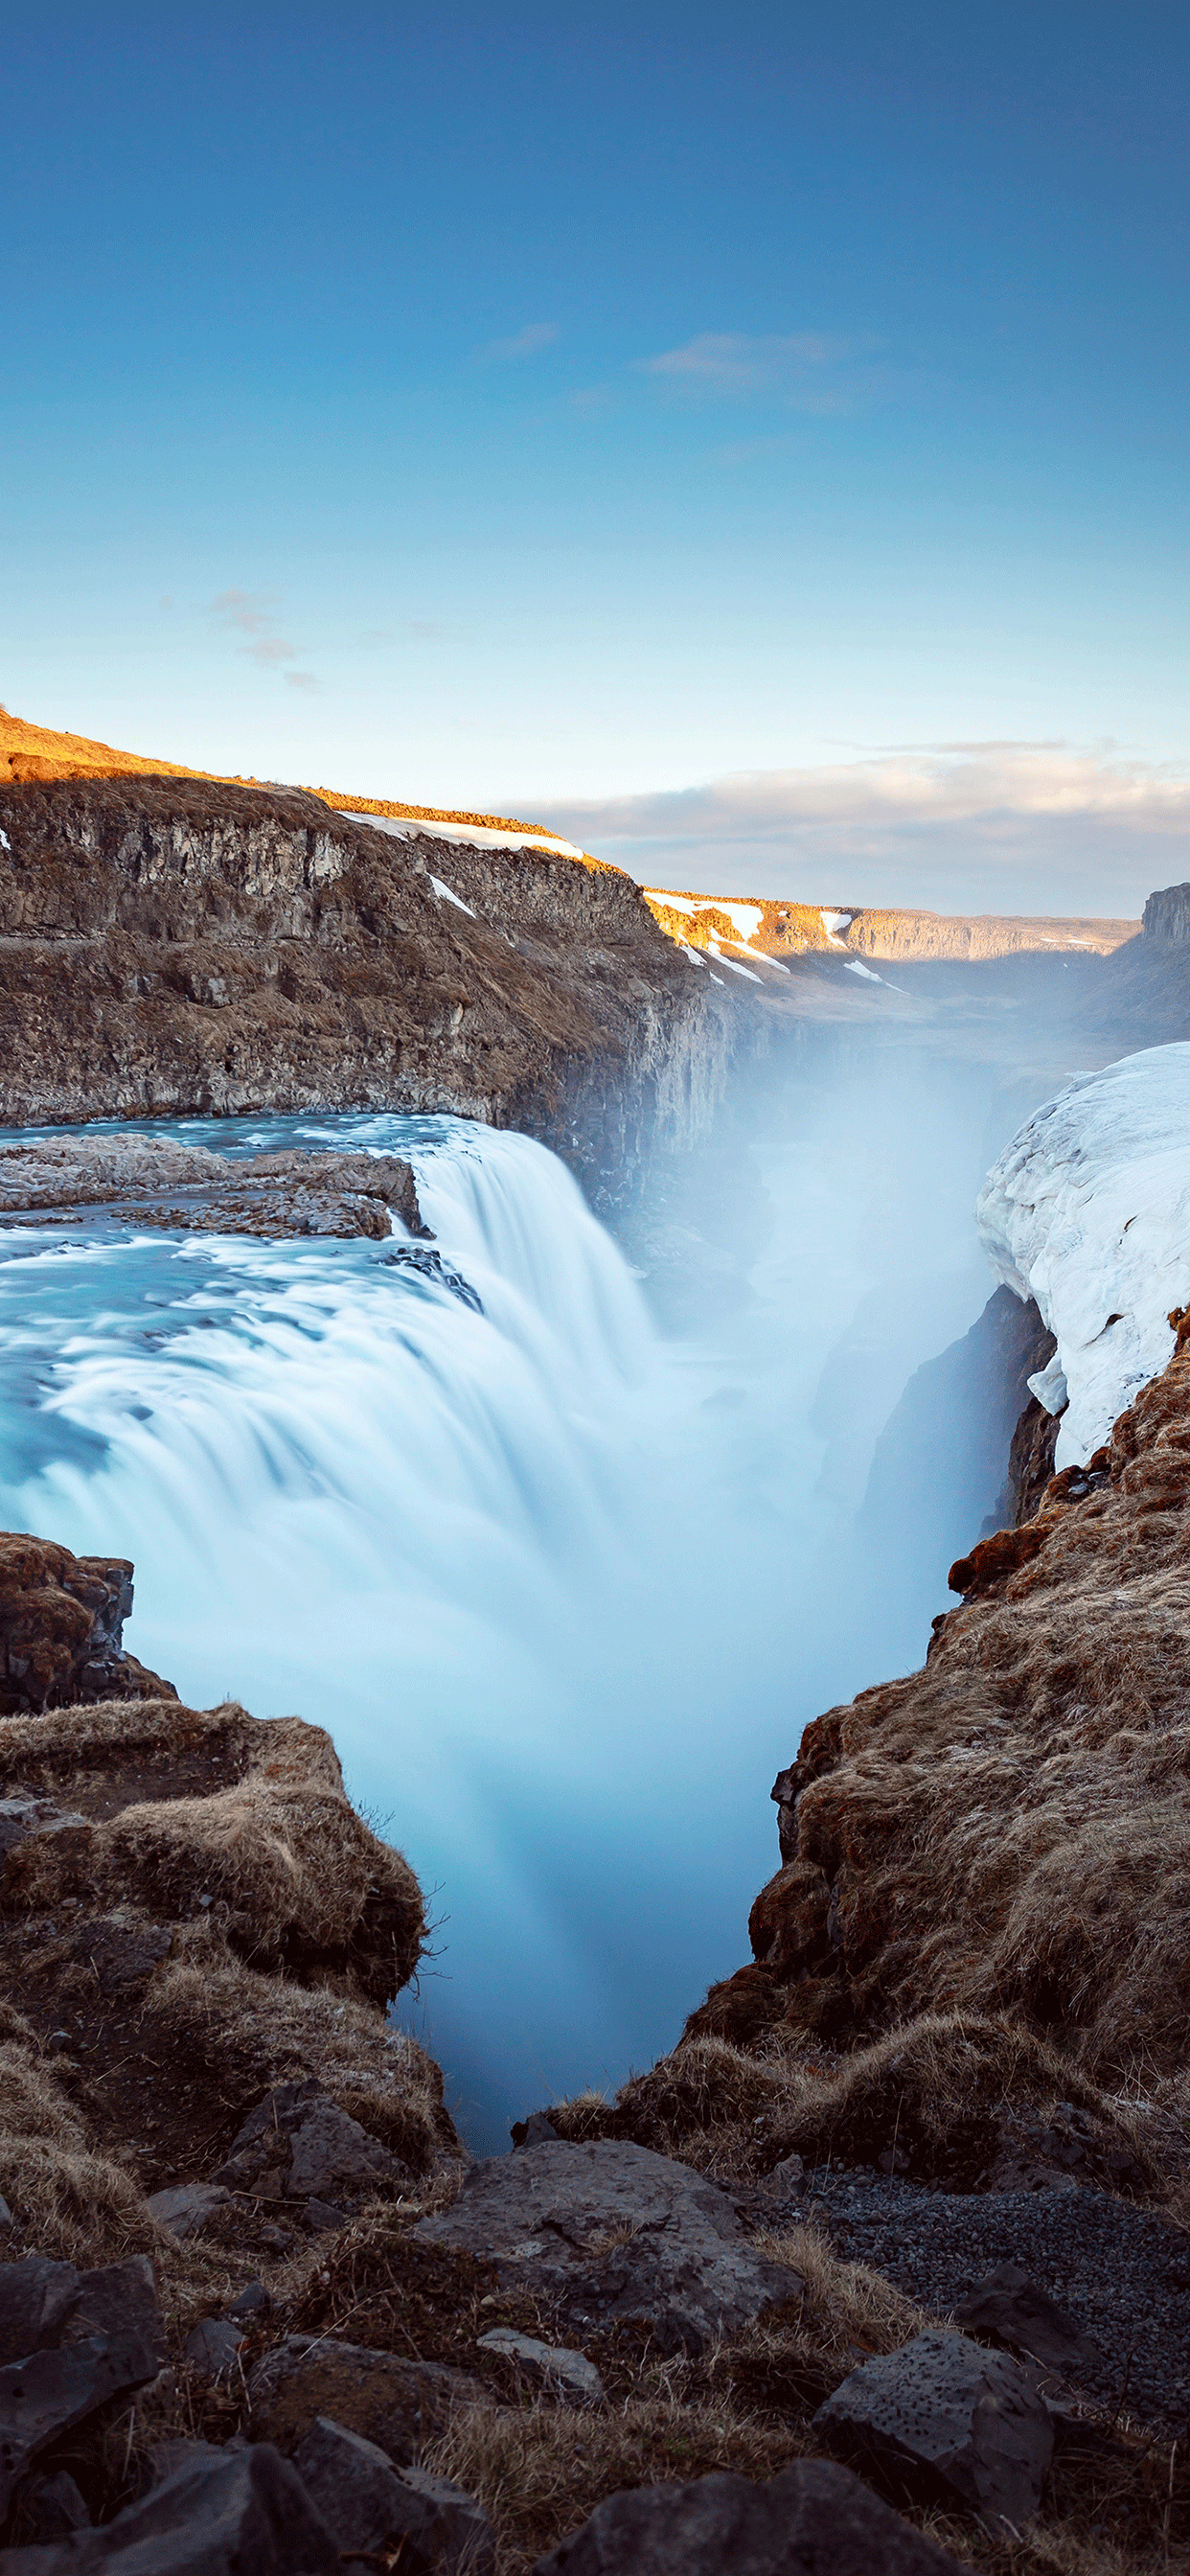 Gullfoss Waterfall, Iceland wallpaper, iPhone wallpaper, Free download, 1250x2690 HD Phone